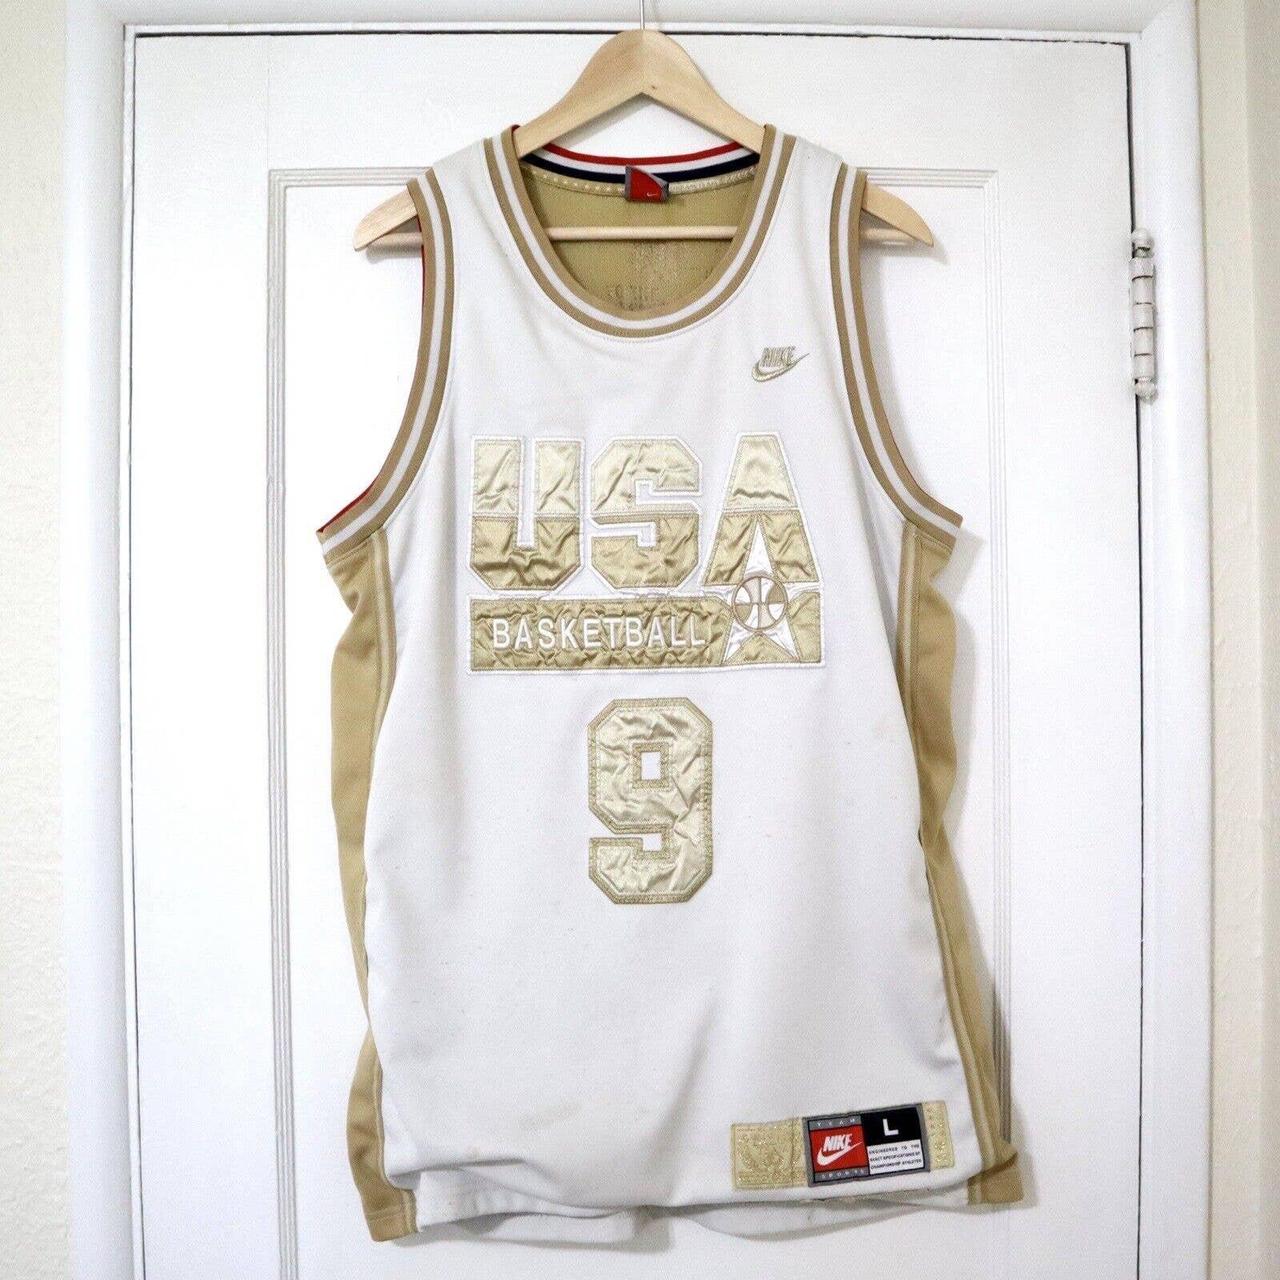 Michael Jordan USA White and Gold Basketball Jersey